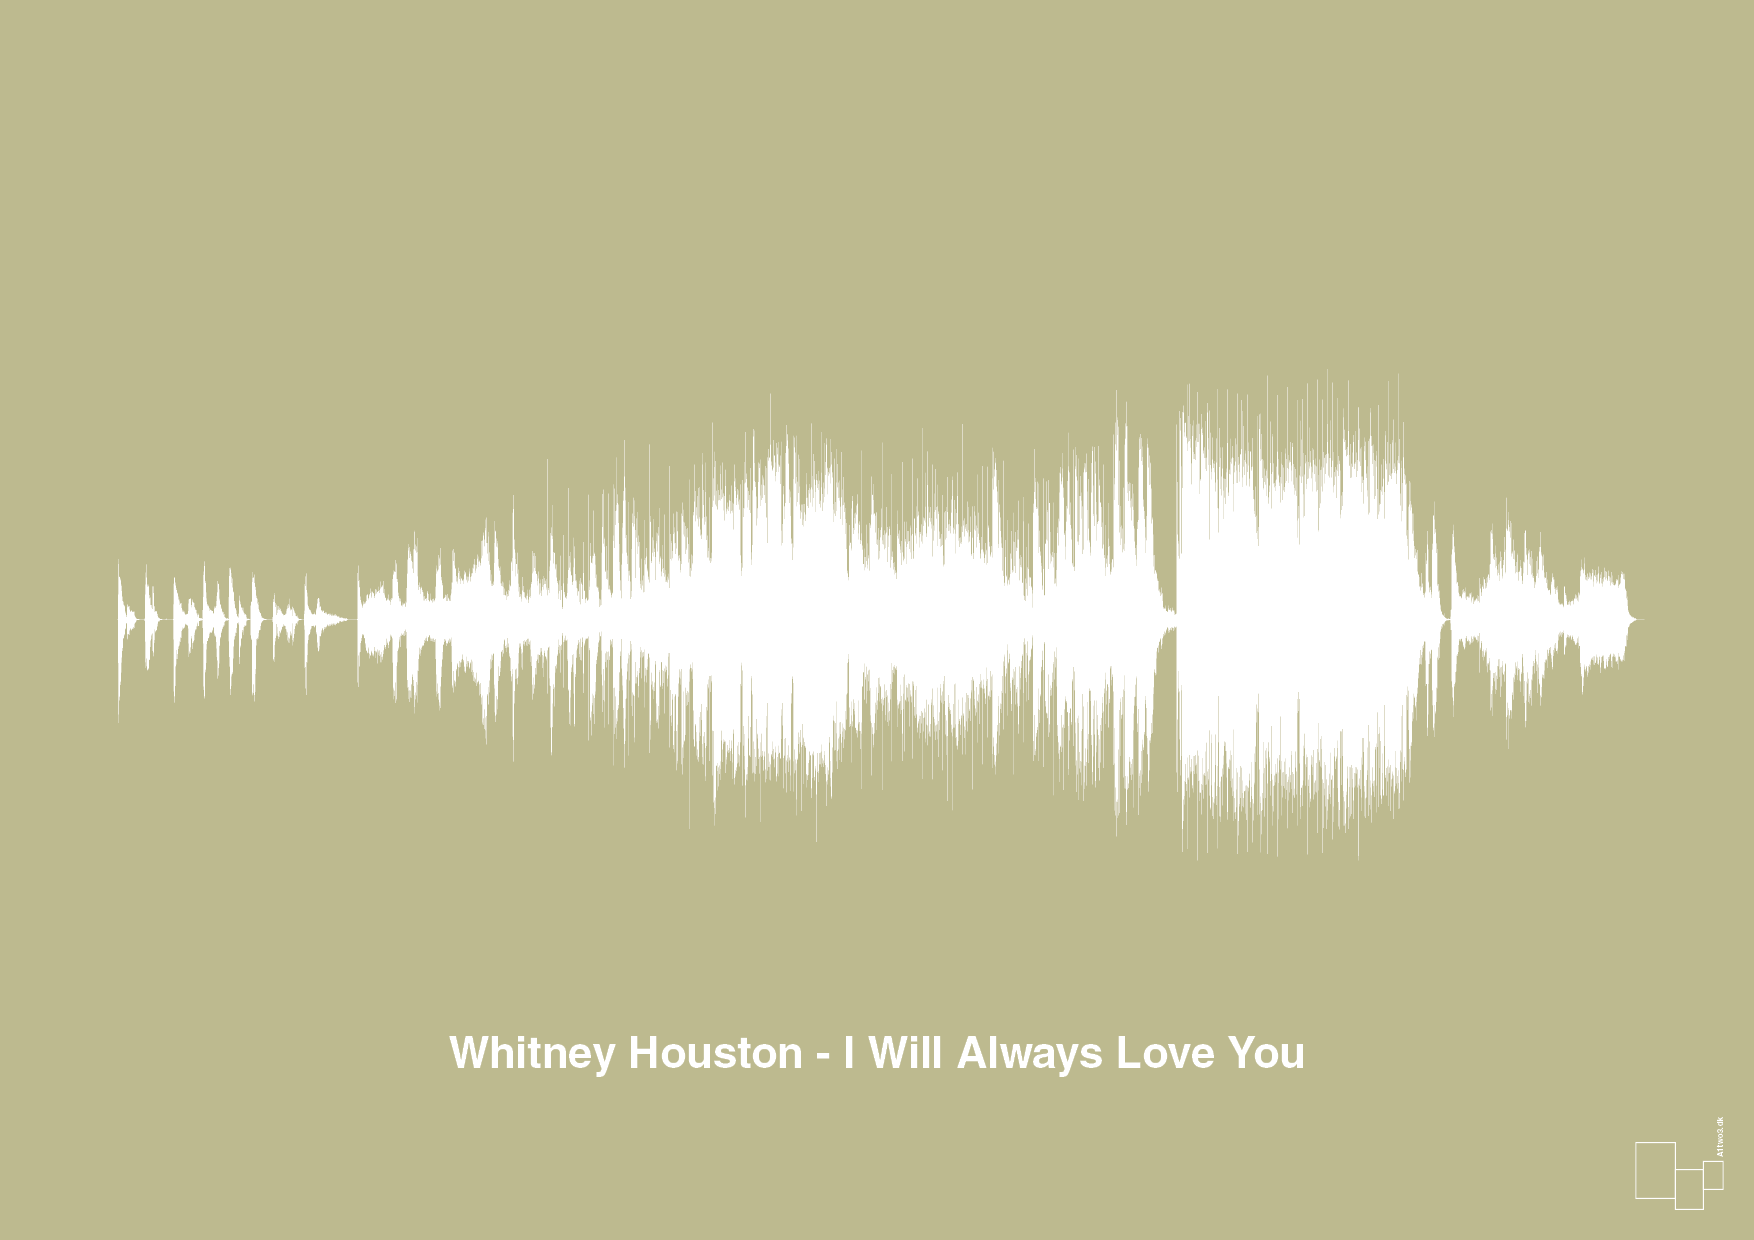 whitney houston - i will always love you - Plakat med Musik i Back to Nature